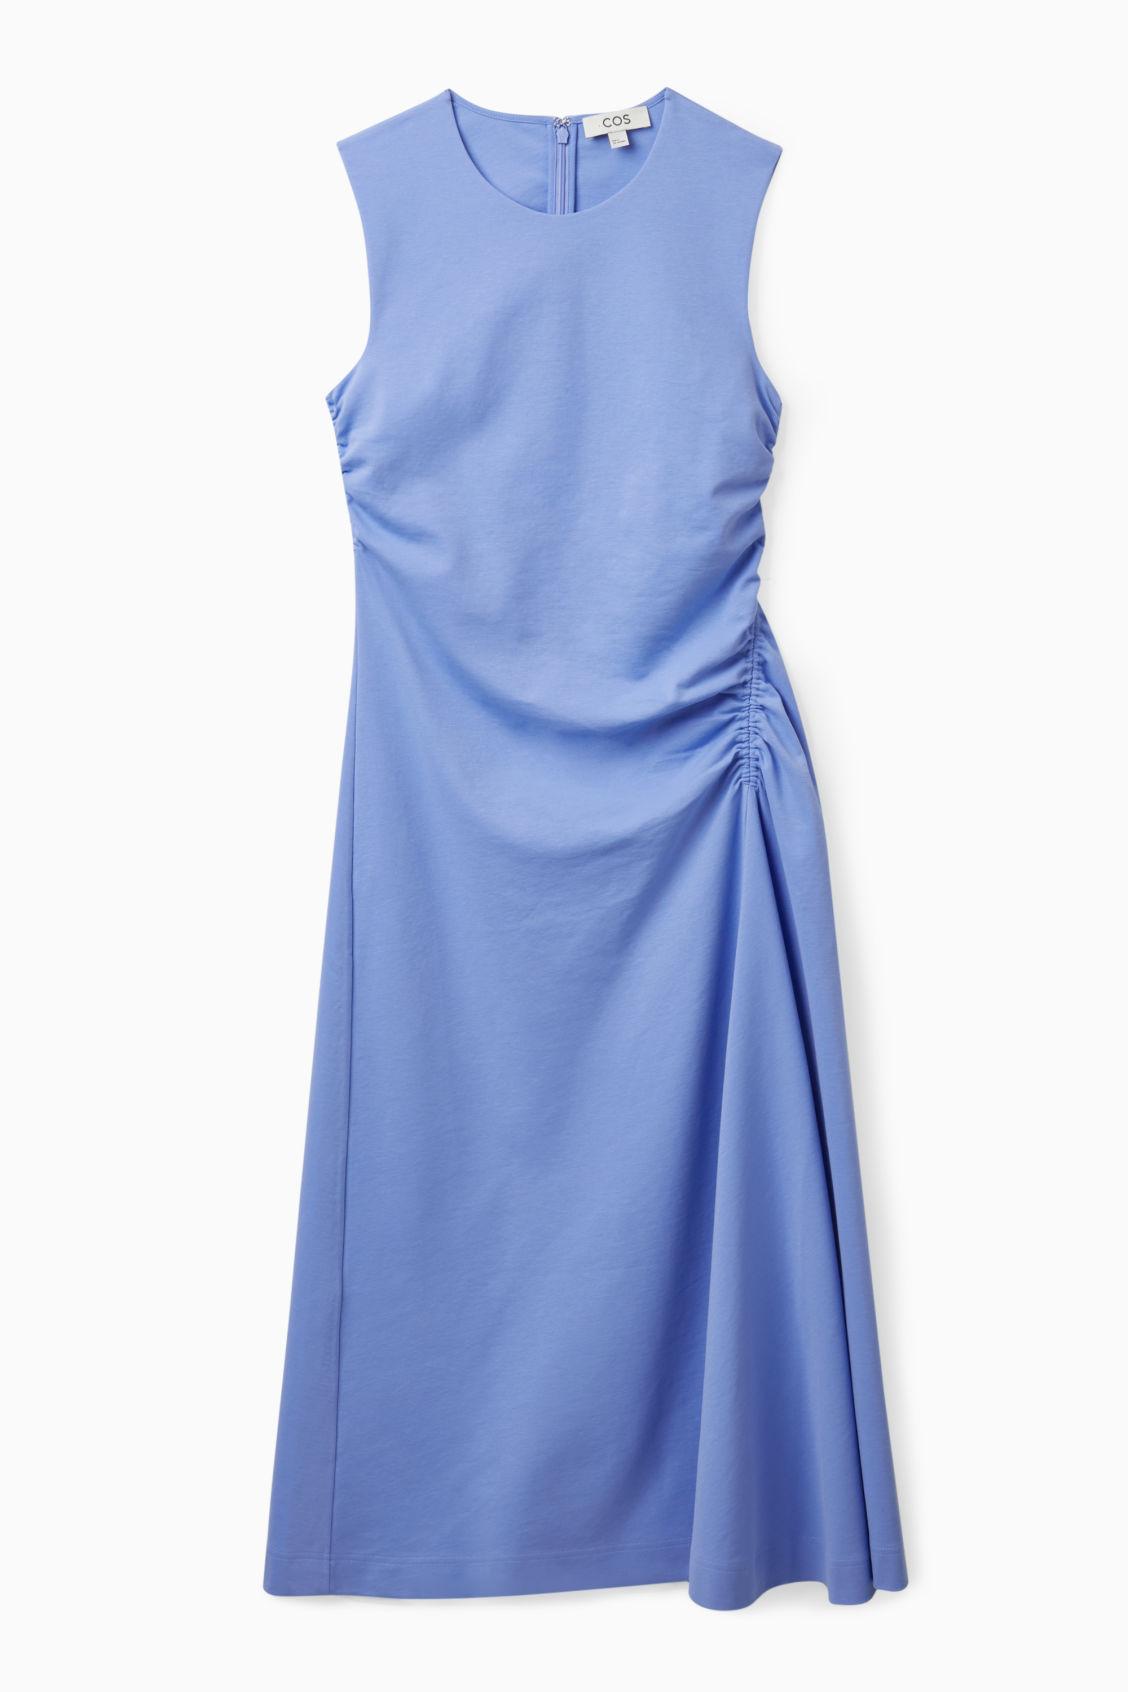 COS Gathered Midi Dress in Blue | Lyst